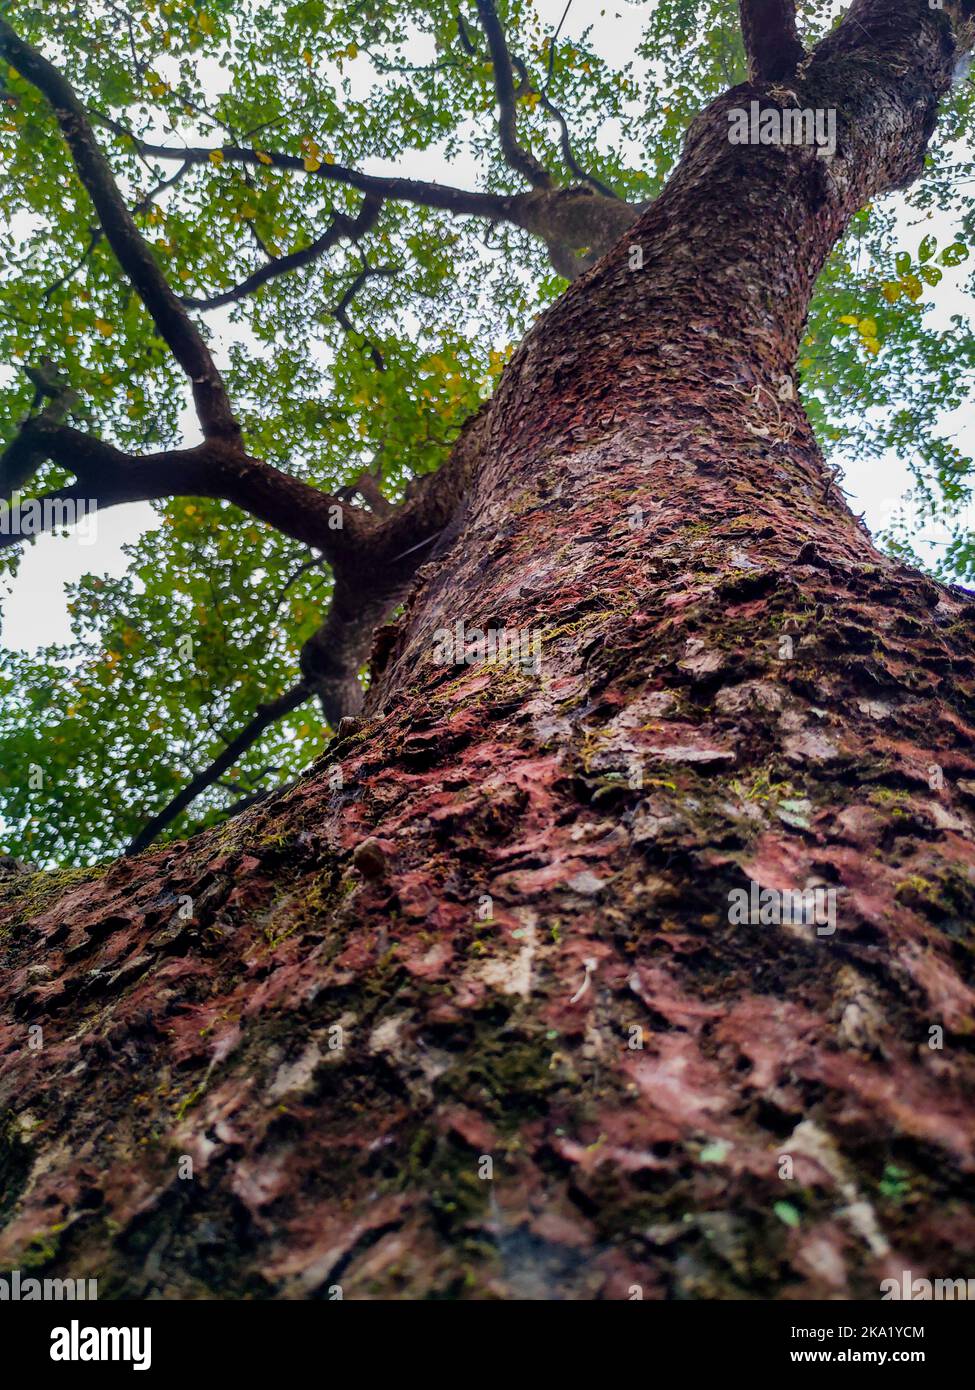 An upward shot of a big Neem tree. Textured bark. Uttarakhand India. Stock Photo